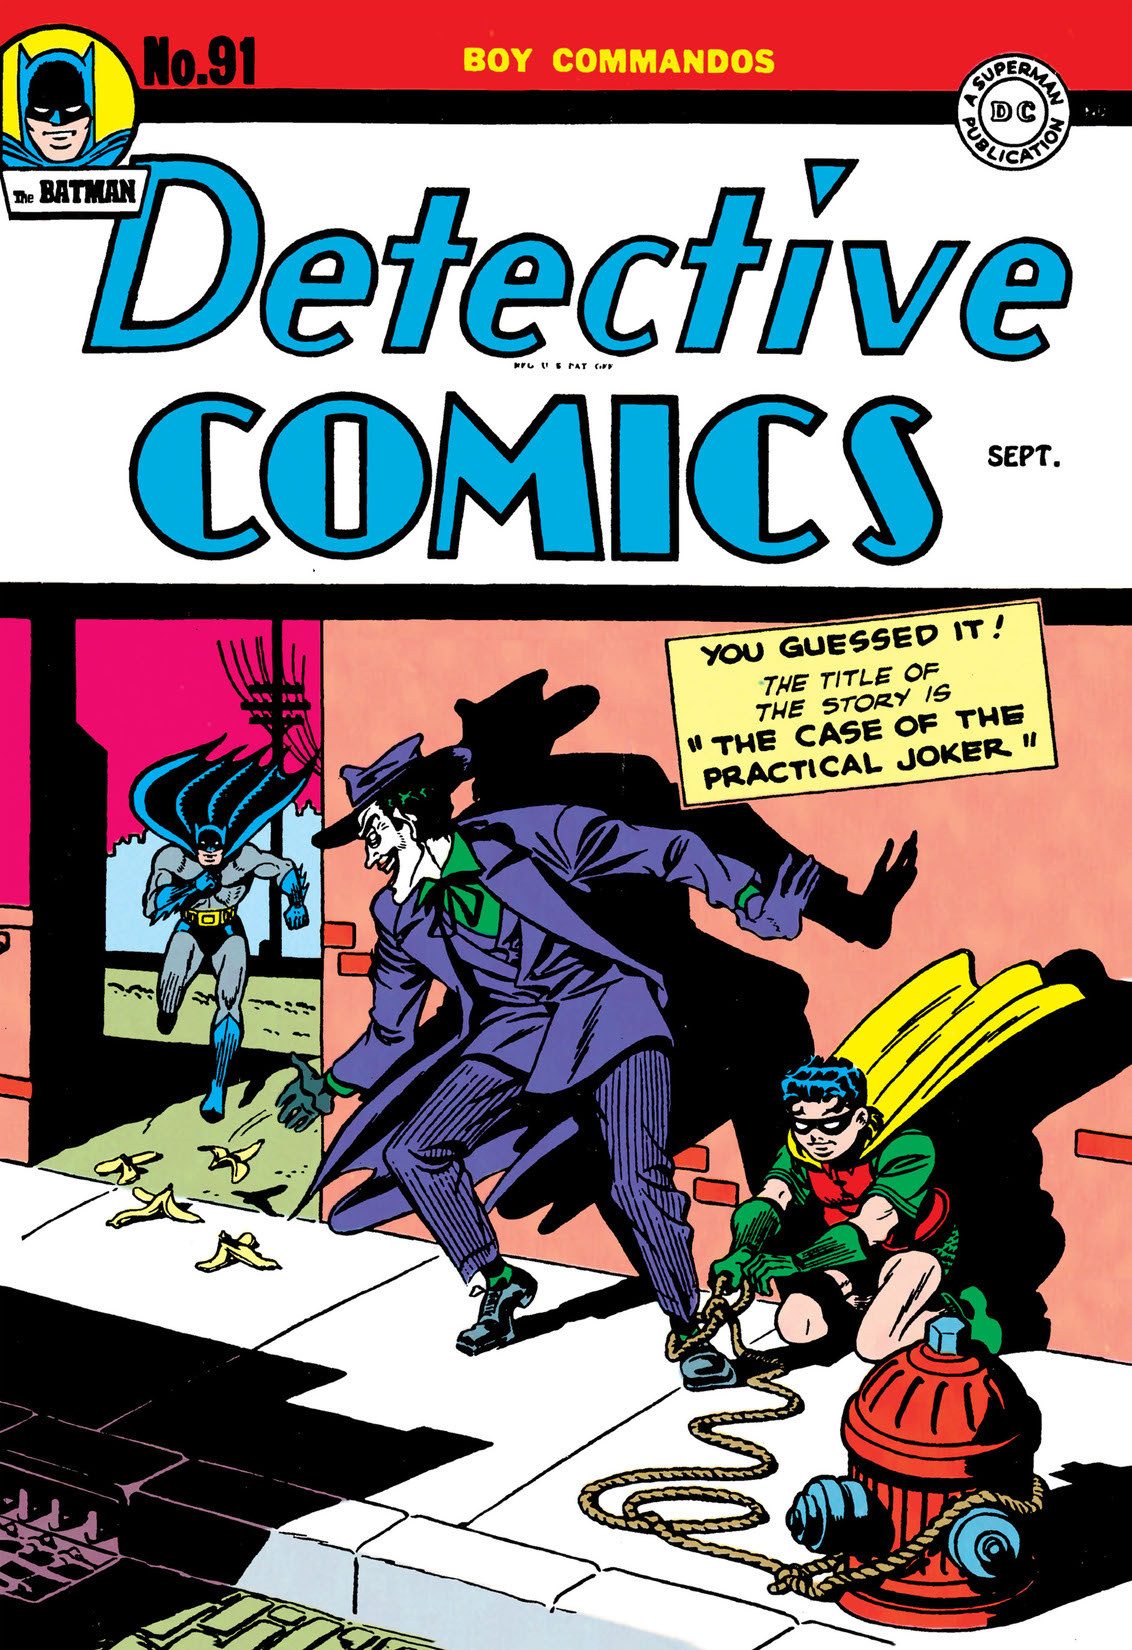 Detective Comics (1937-) #91 preview images